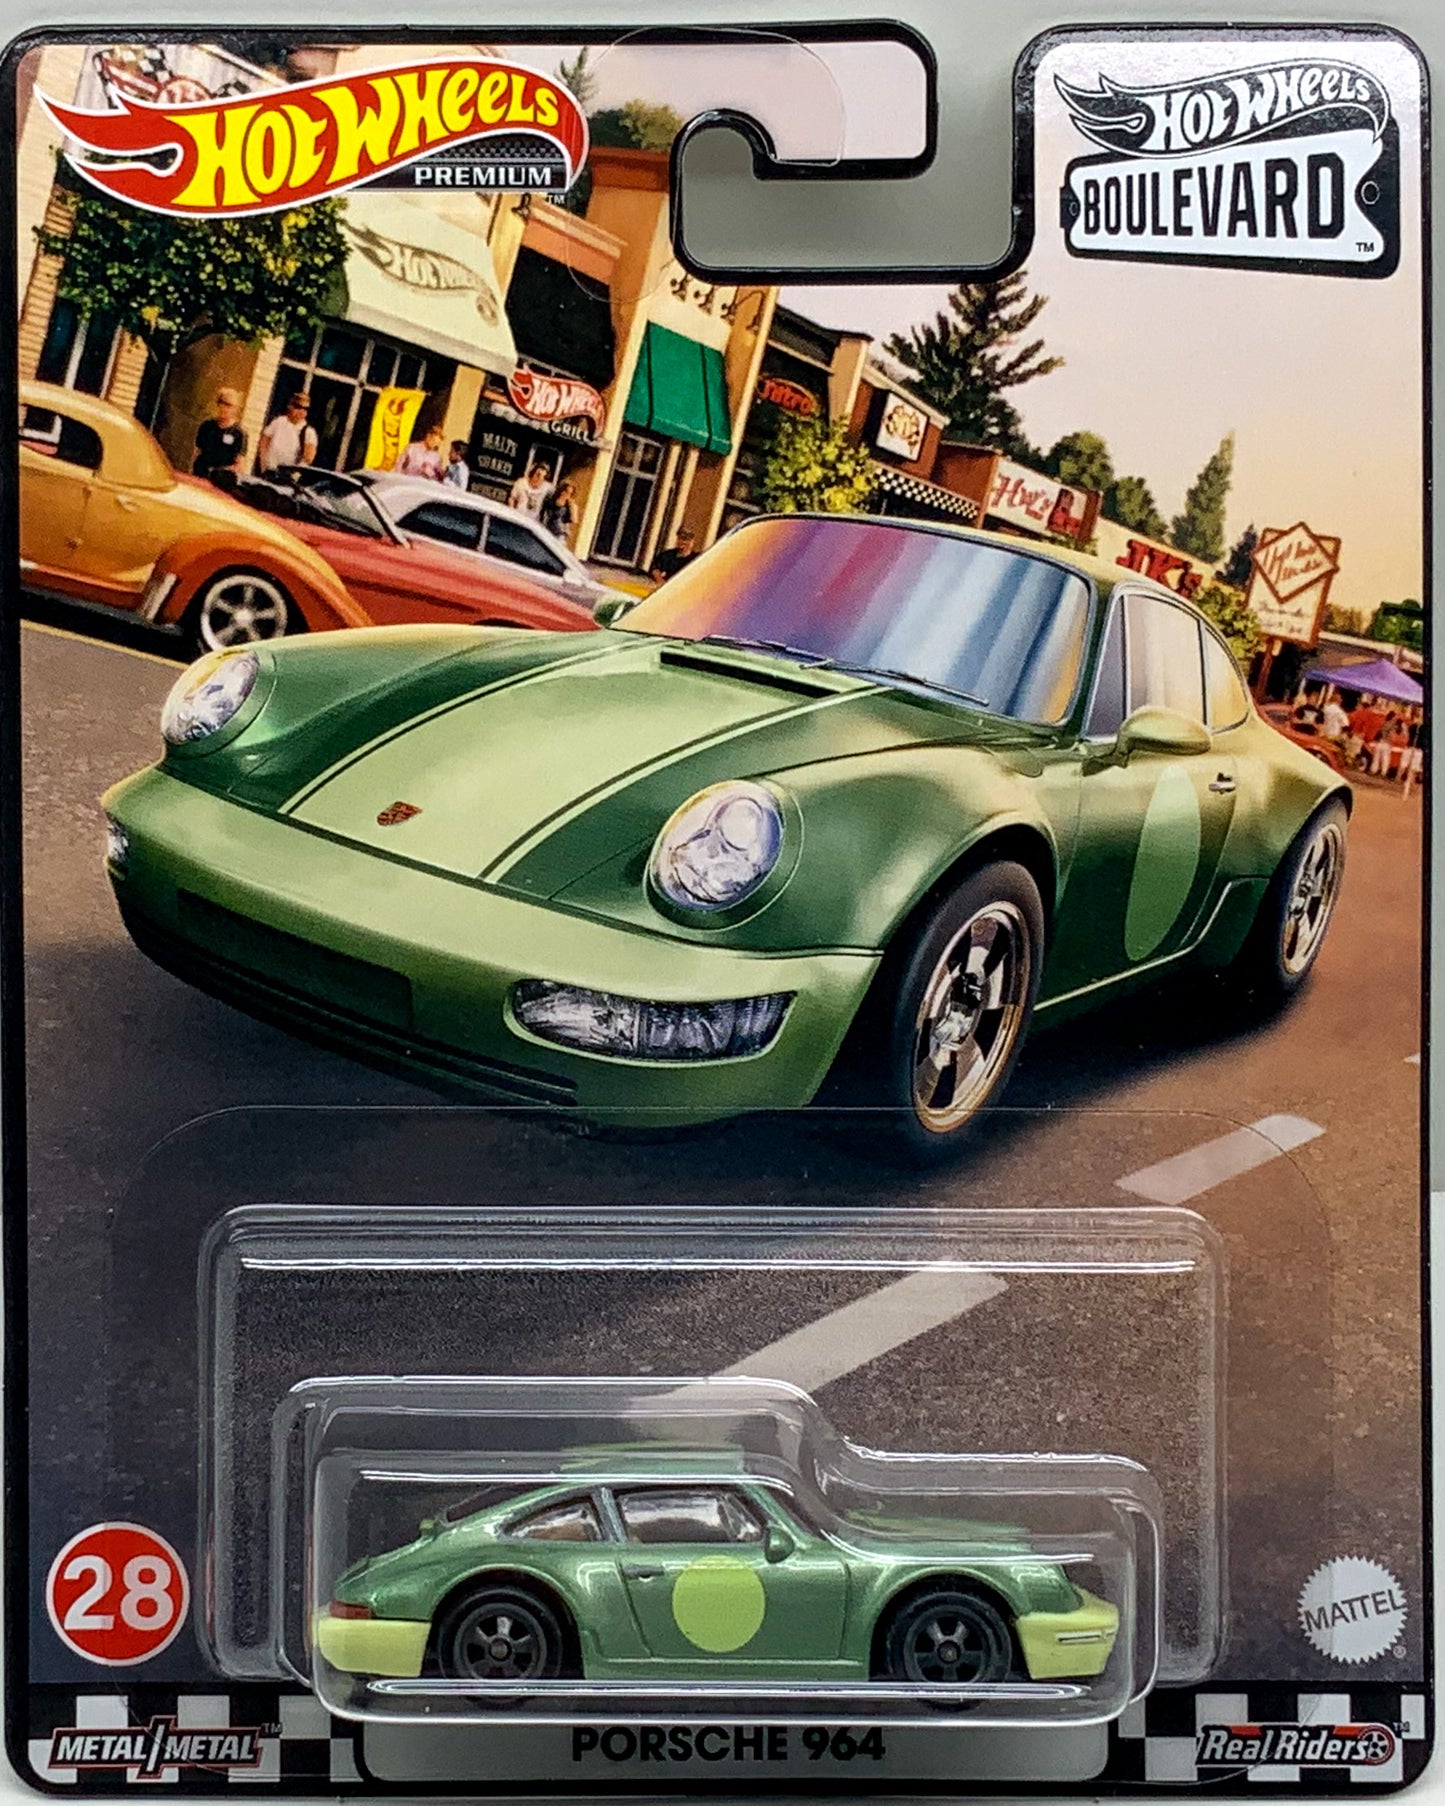 Buy at Tatoy Hot Wheels Boulevard Porsche 964 number 28 Premium Real Riders Metal Mattel GJT68